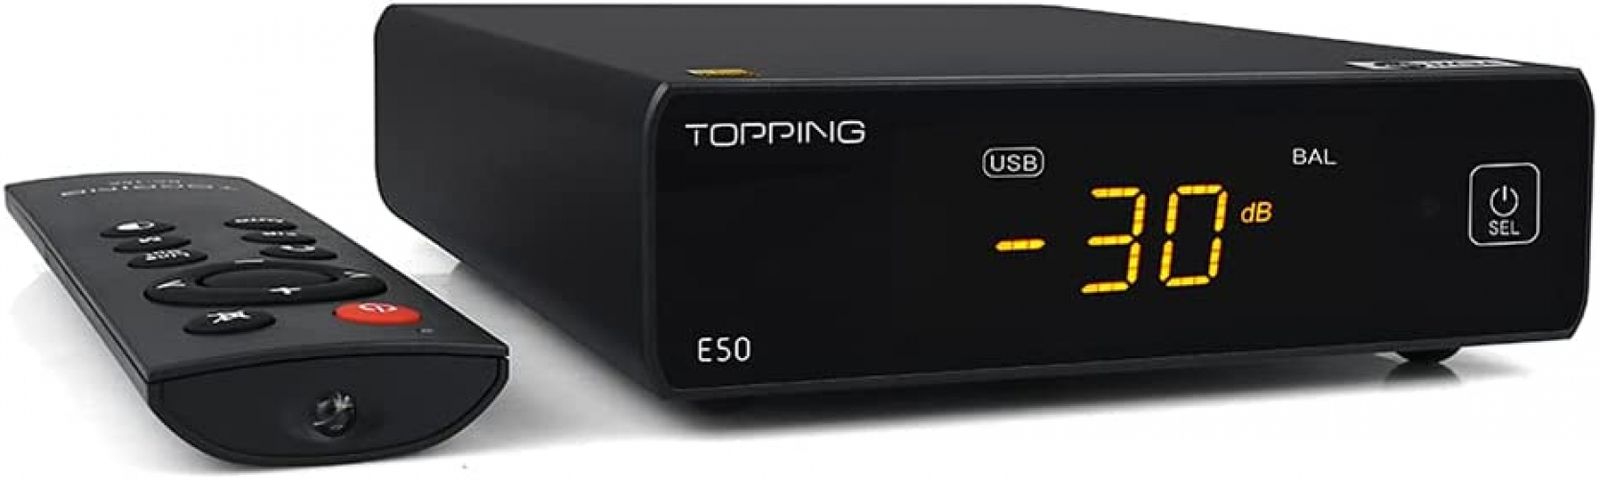 Topping E50 MQA DAC ES9068AS XMOS XU216 DSD512(Nativ) DSD256(DOP) PCM768kHz USB DAC USB/KOAX/Opt Eingänge RCA/TRS Ausgänge Decoder mit Fernbedienung (Schwarz)